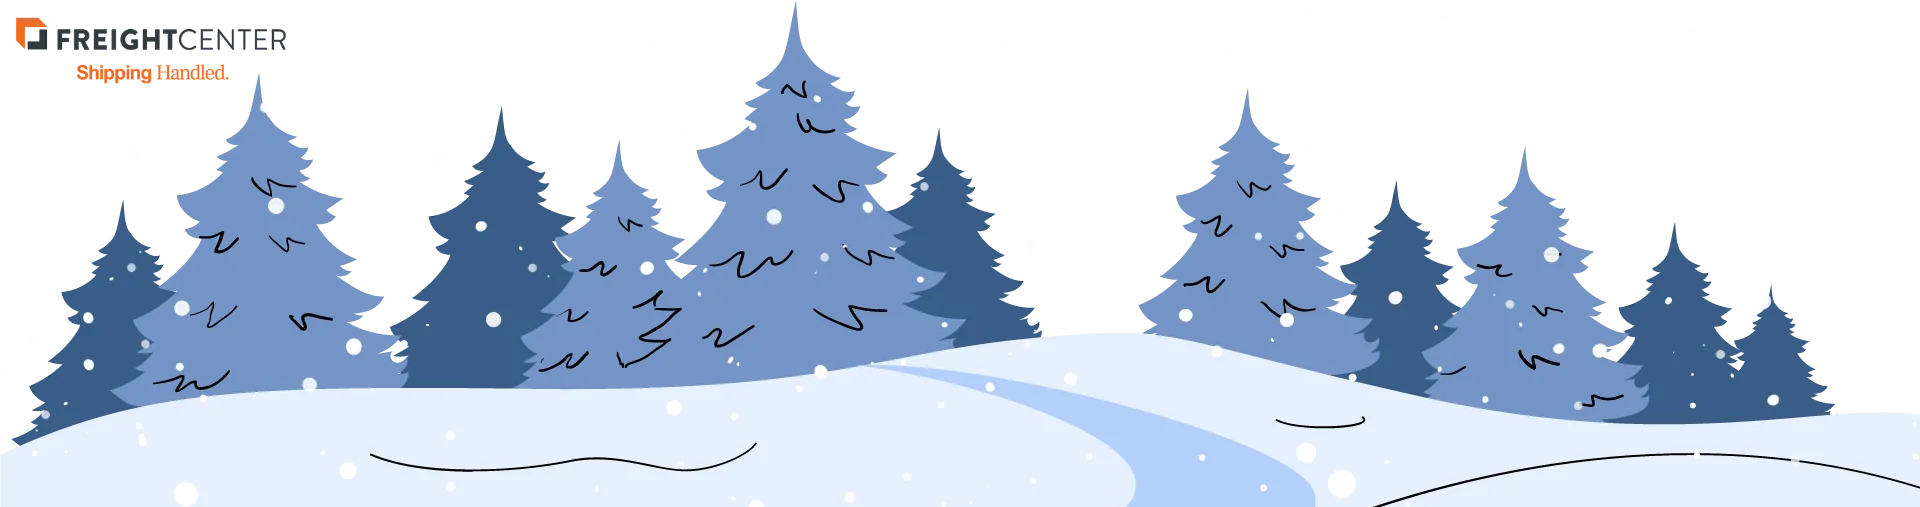 snowy forest scene illustration